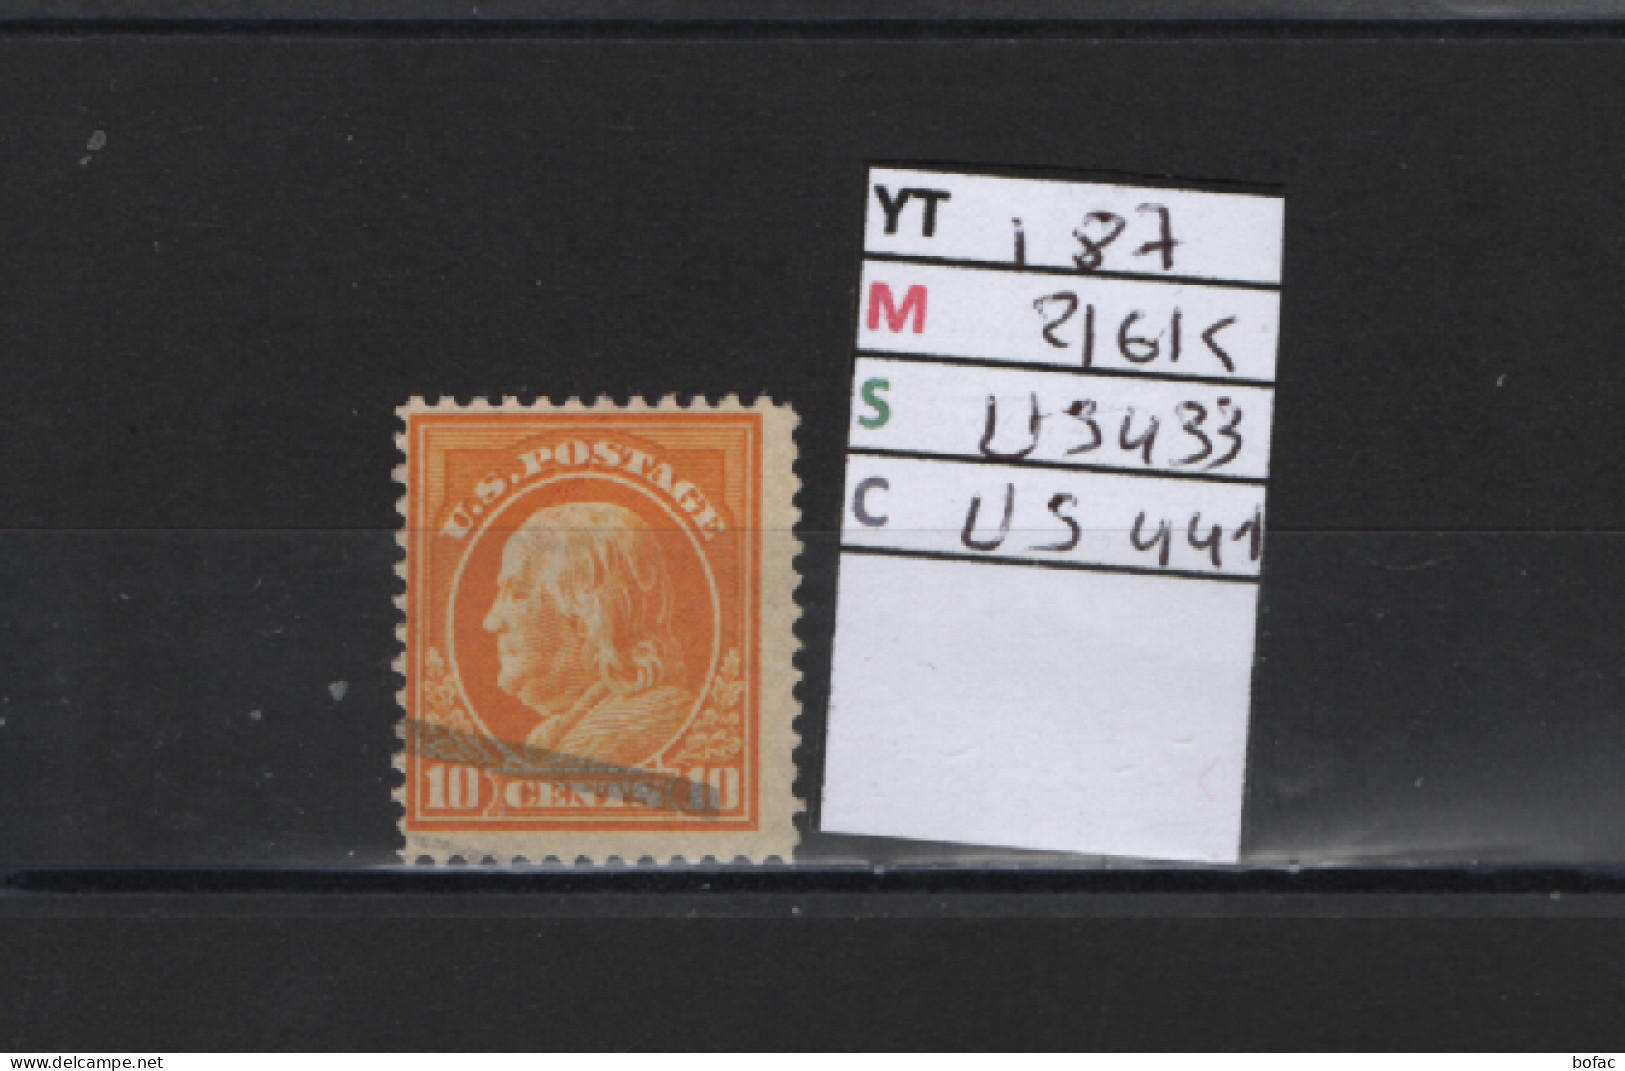 PRIX FIXE Obl 187 YT 216K MIC US433 SCOT US441 GIB  Benjamin Franklin  1912 1915 58/06 Dentelé 3 Cotés - Used Stamps